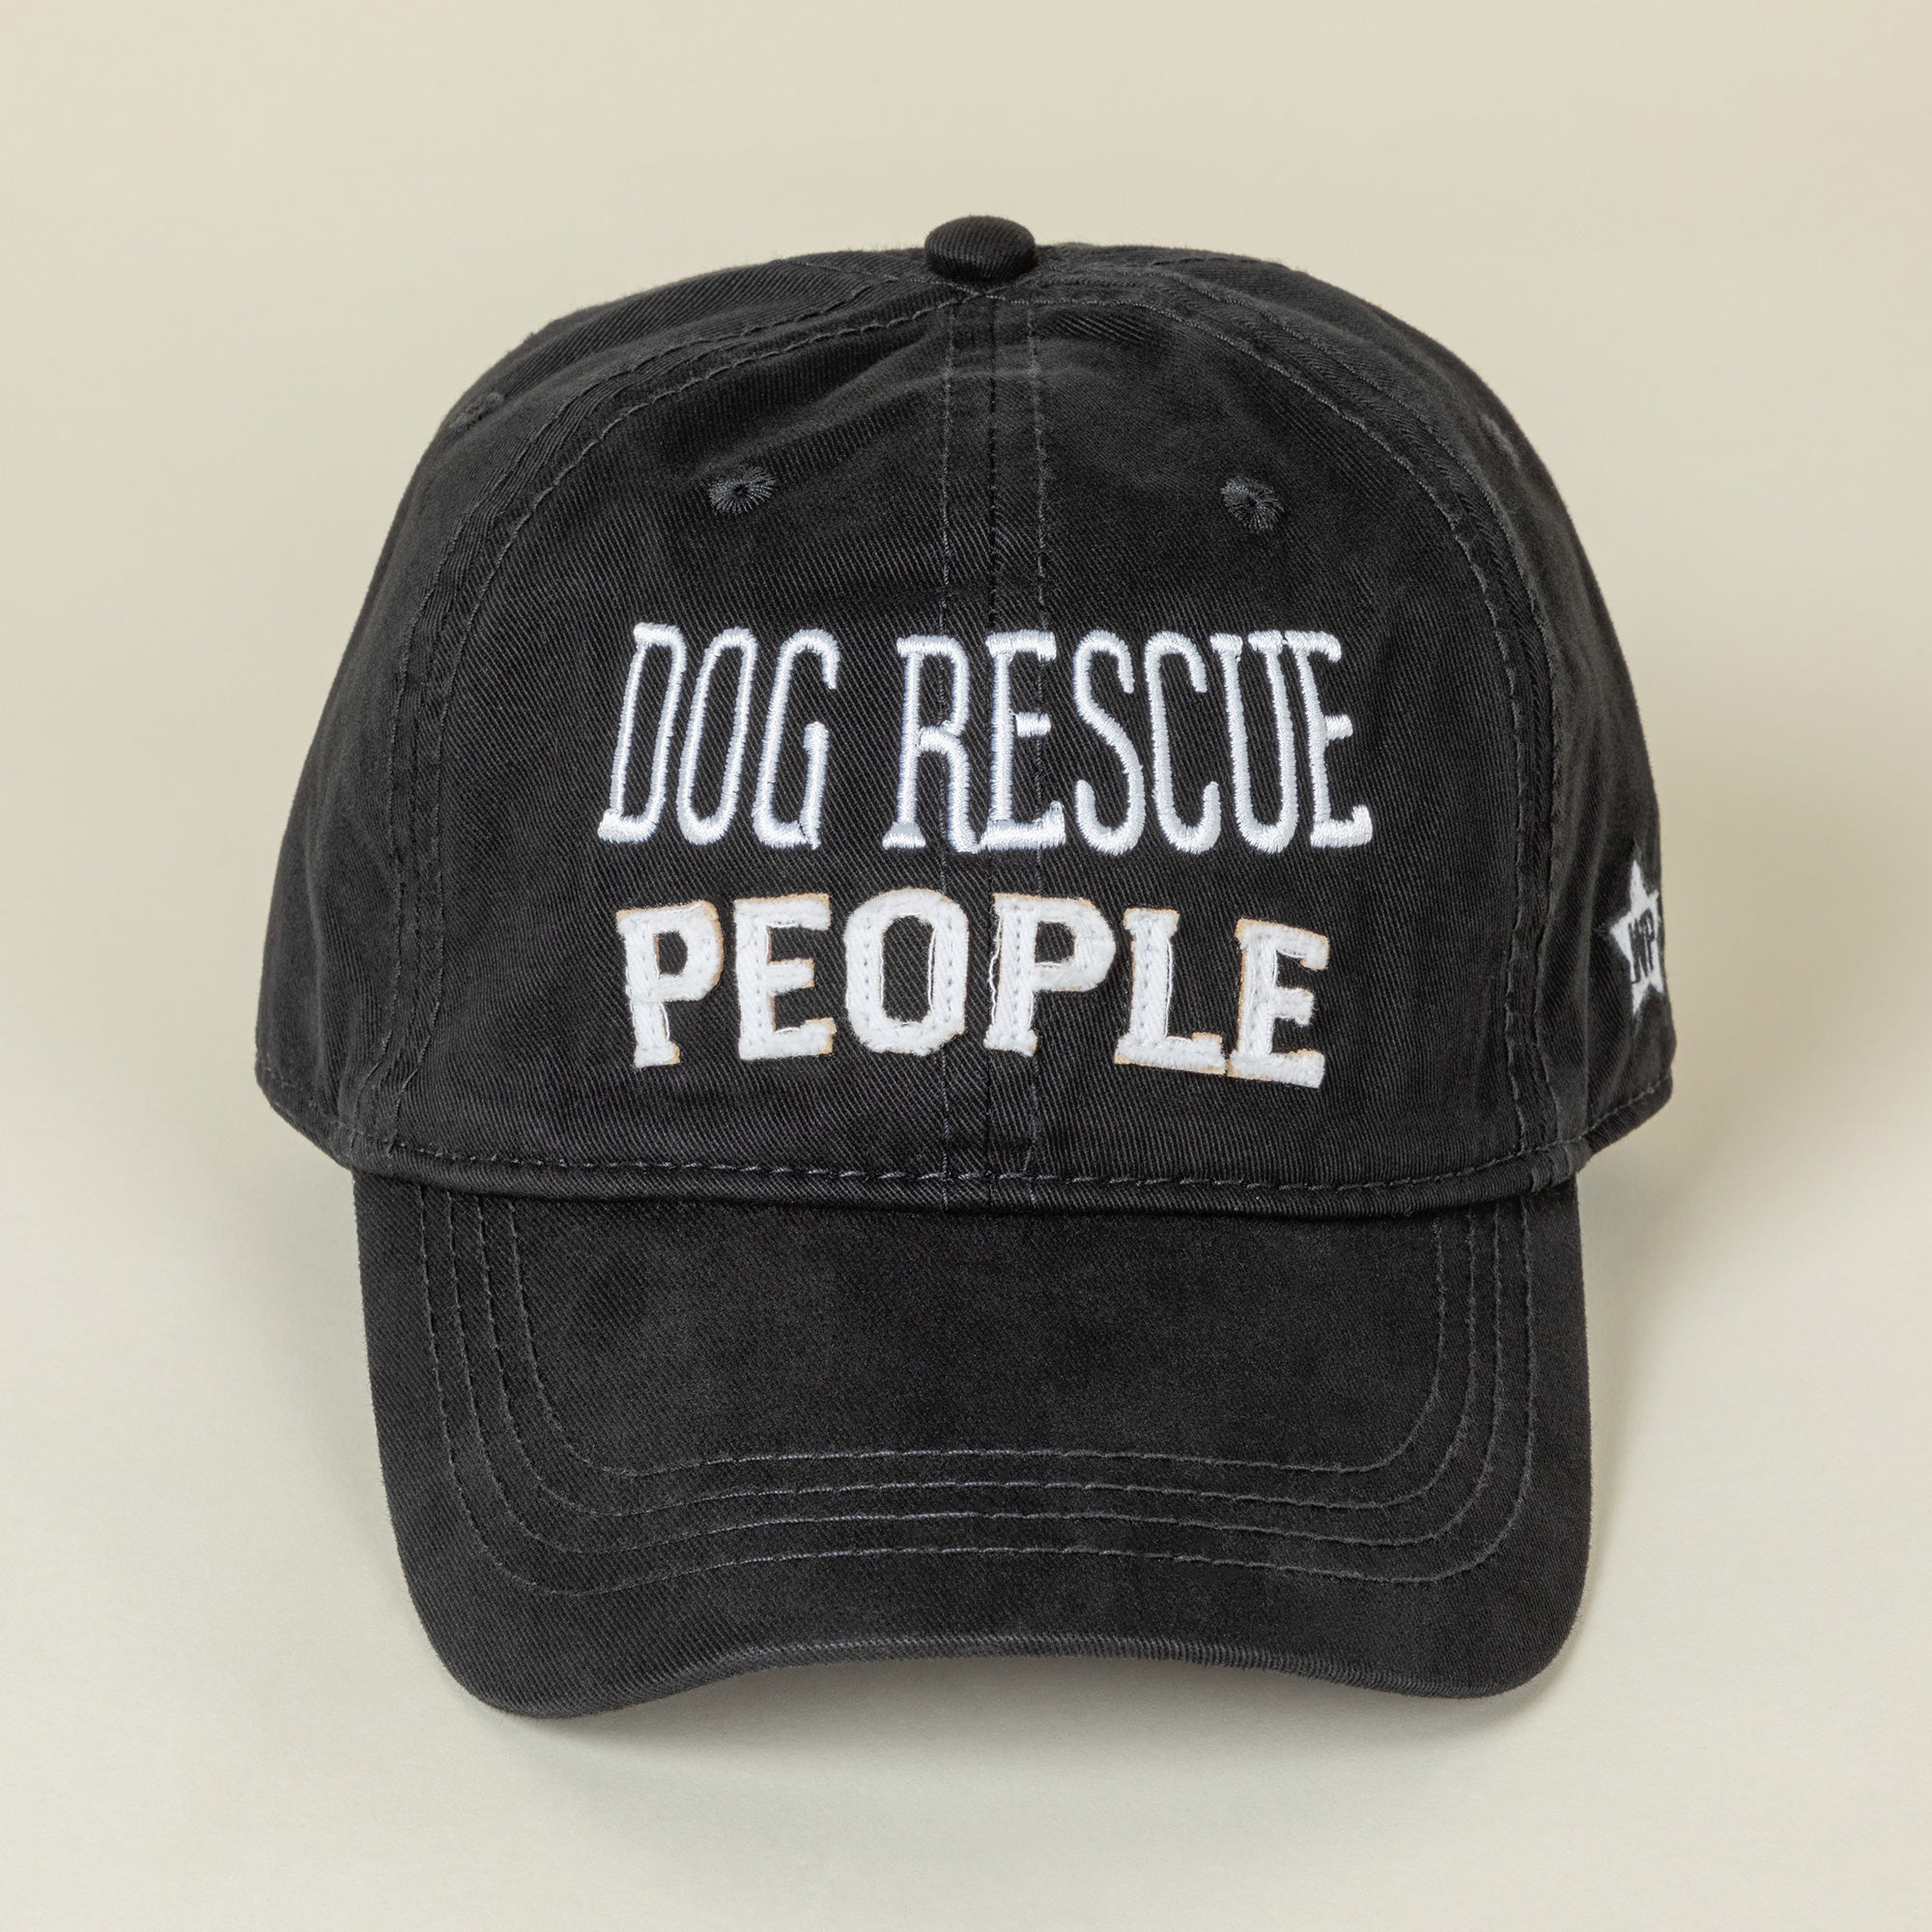 Animal Rescue People Baseball Hat - Black - Dog